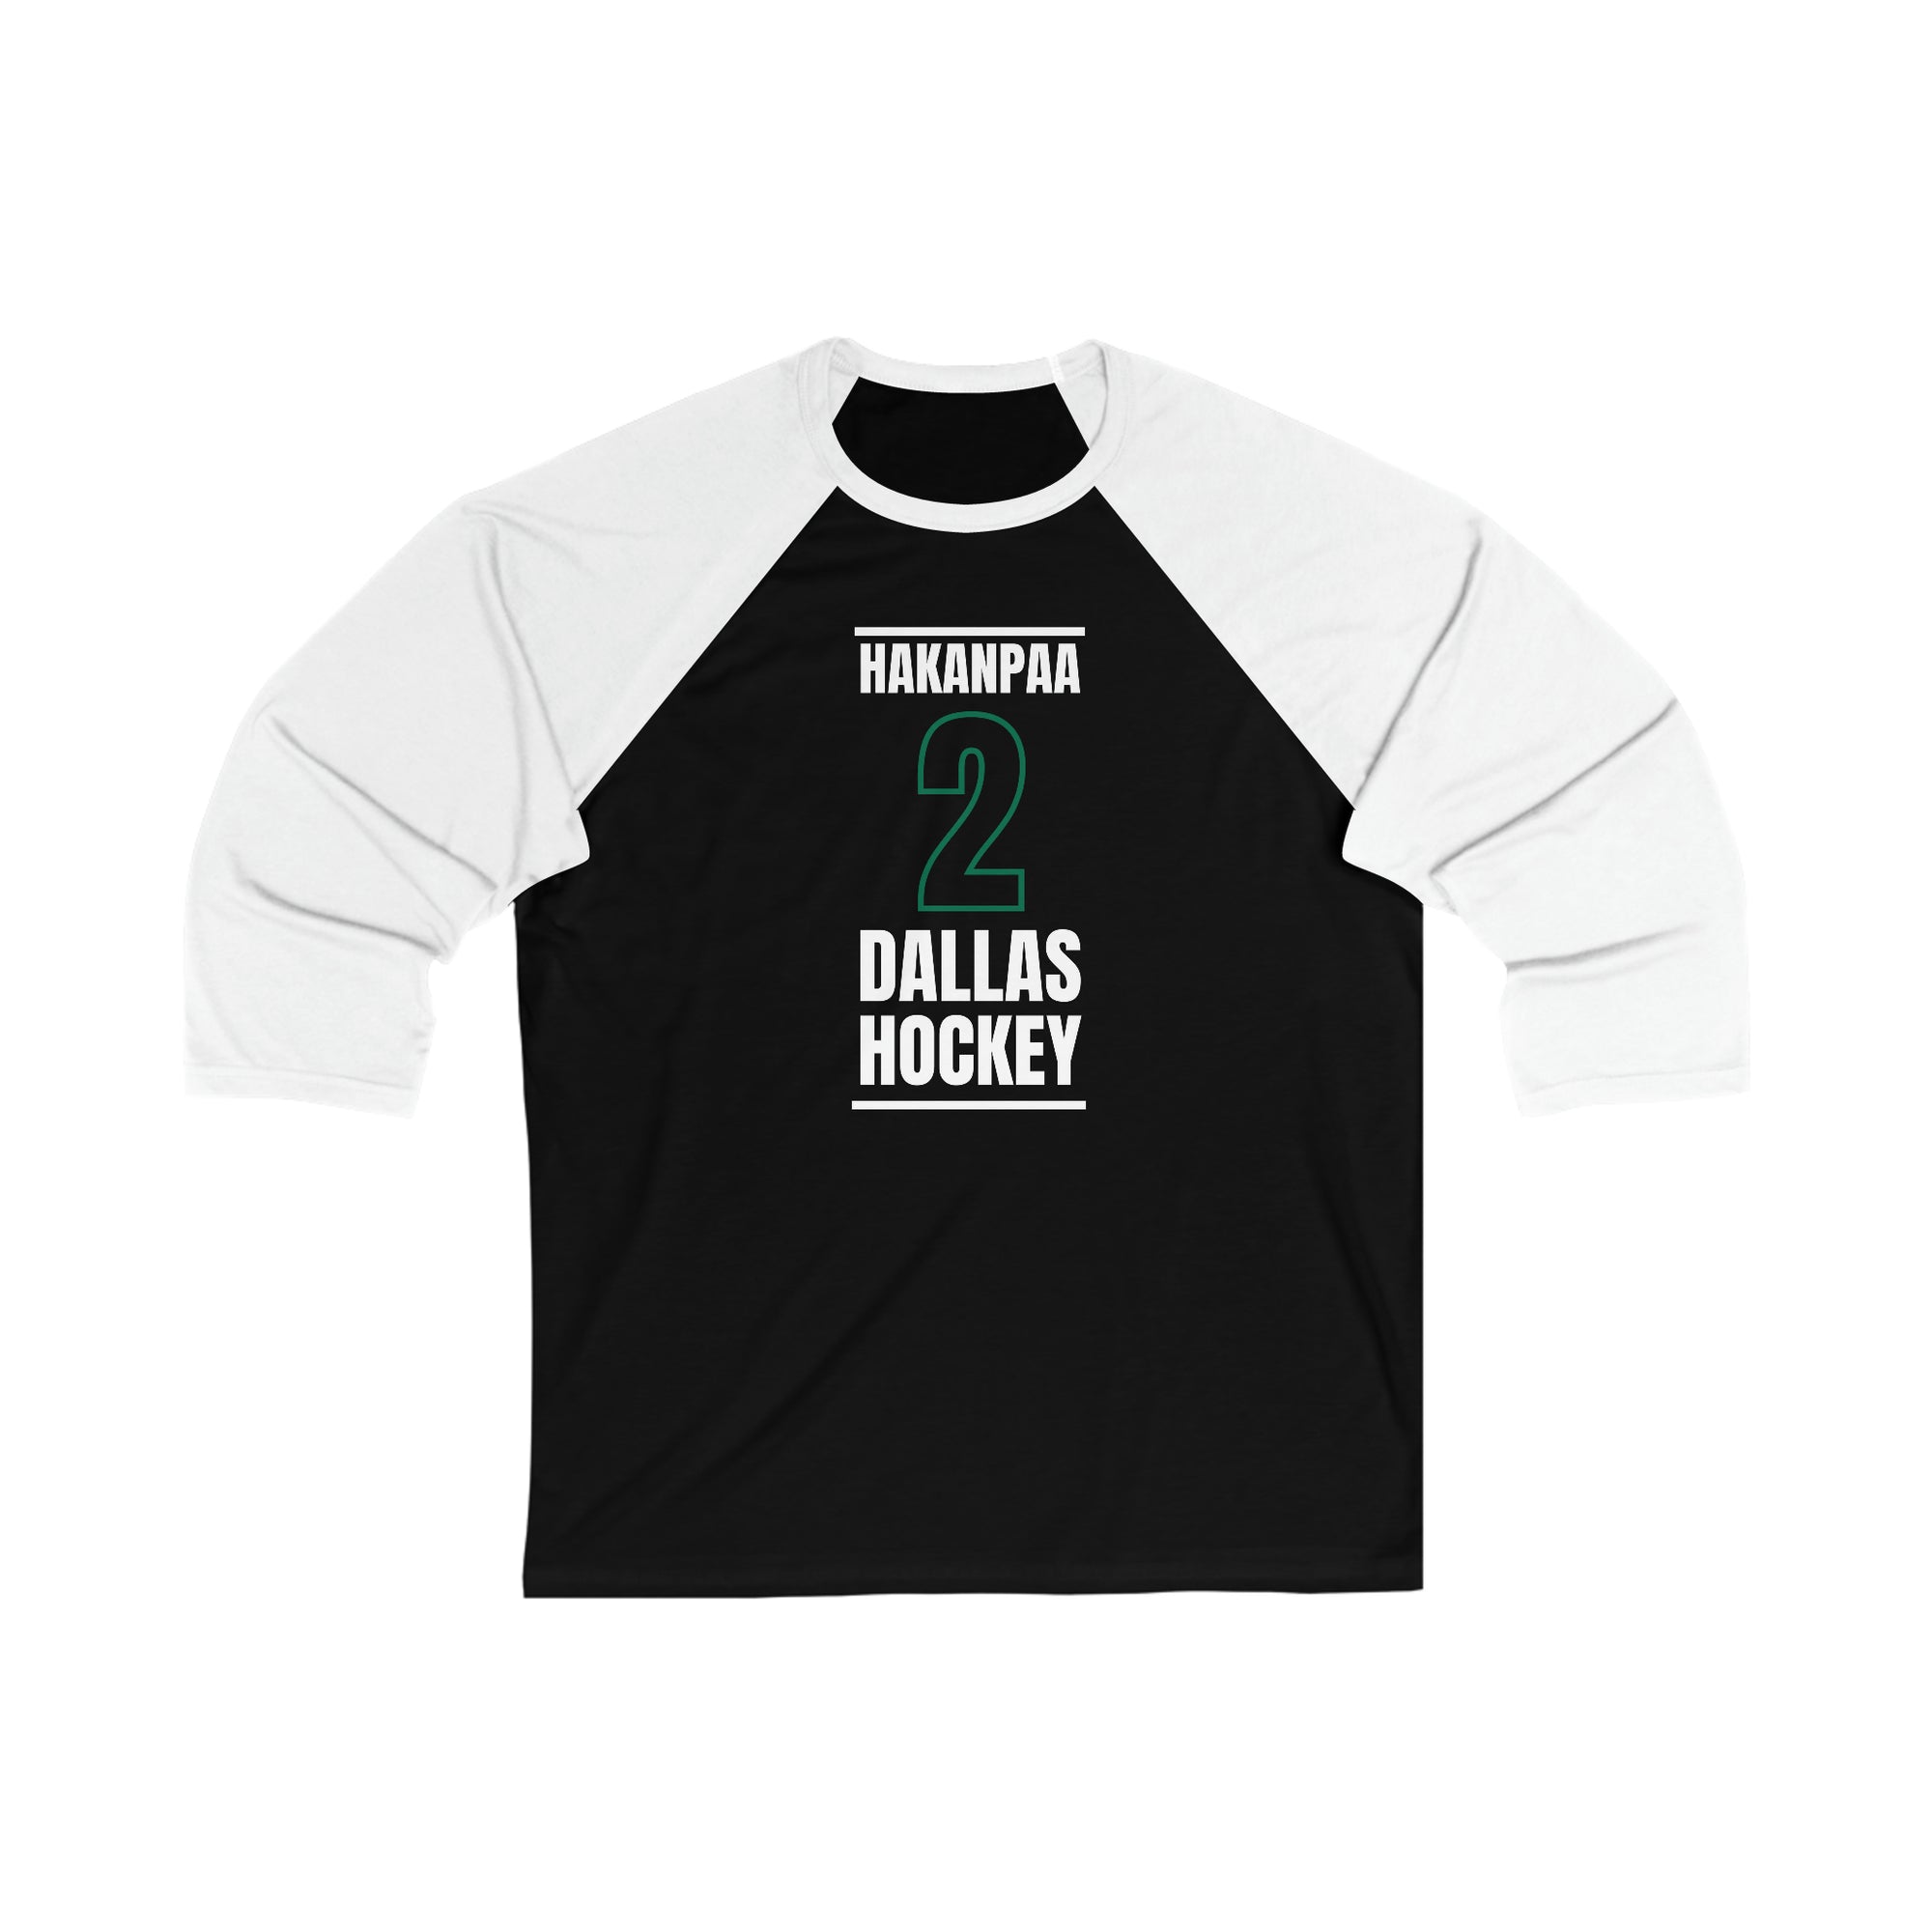 Hakanpaa 2 Dallas Hockey Black Vertical Design Unisex Tri-Blend 3/4 Sleeve Raglan Baseball Shirt